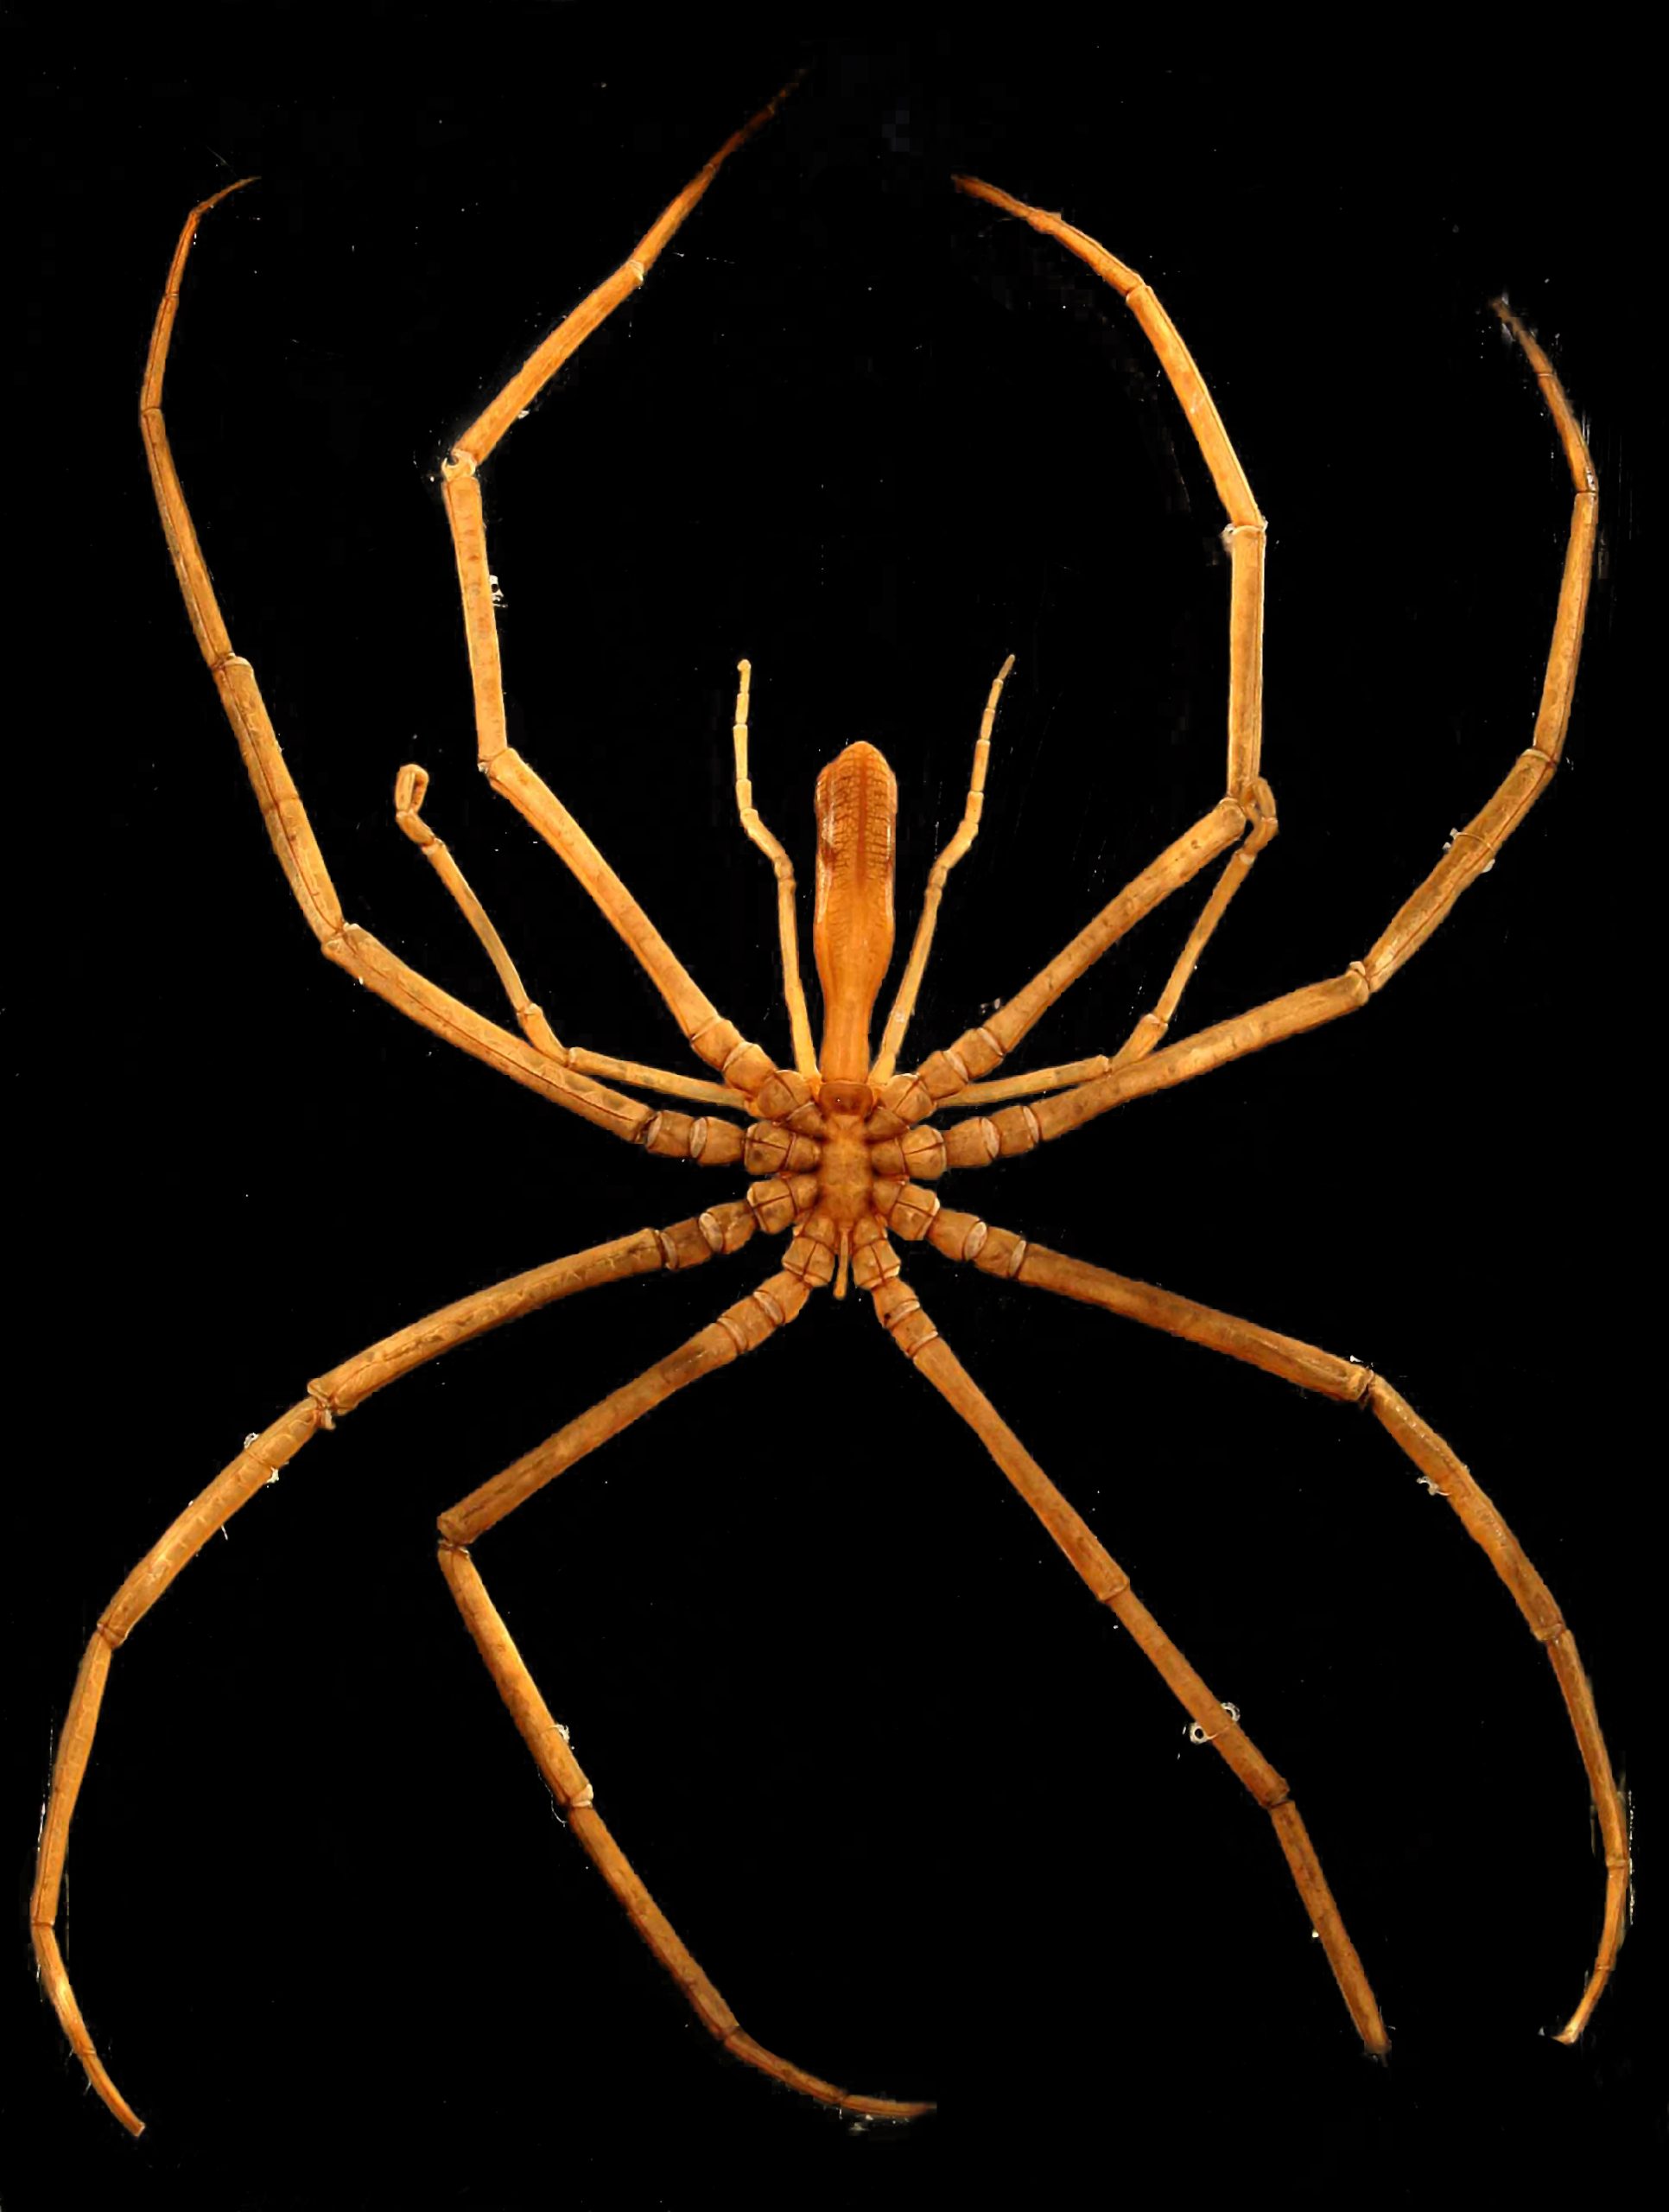 Gigantic Sea Spider Colossendeis proboscidea (418) 